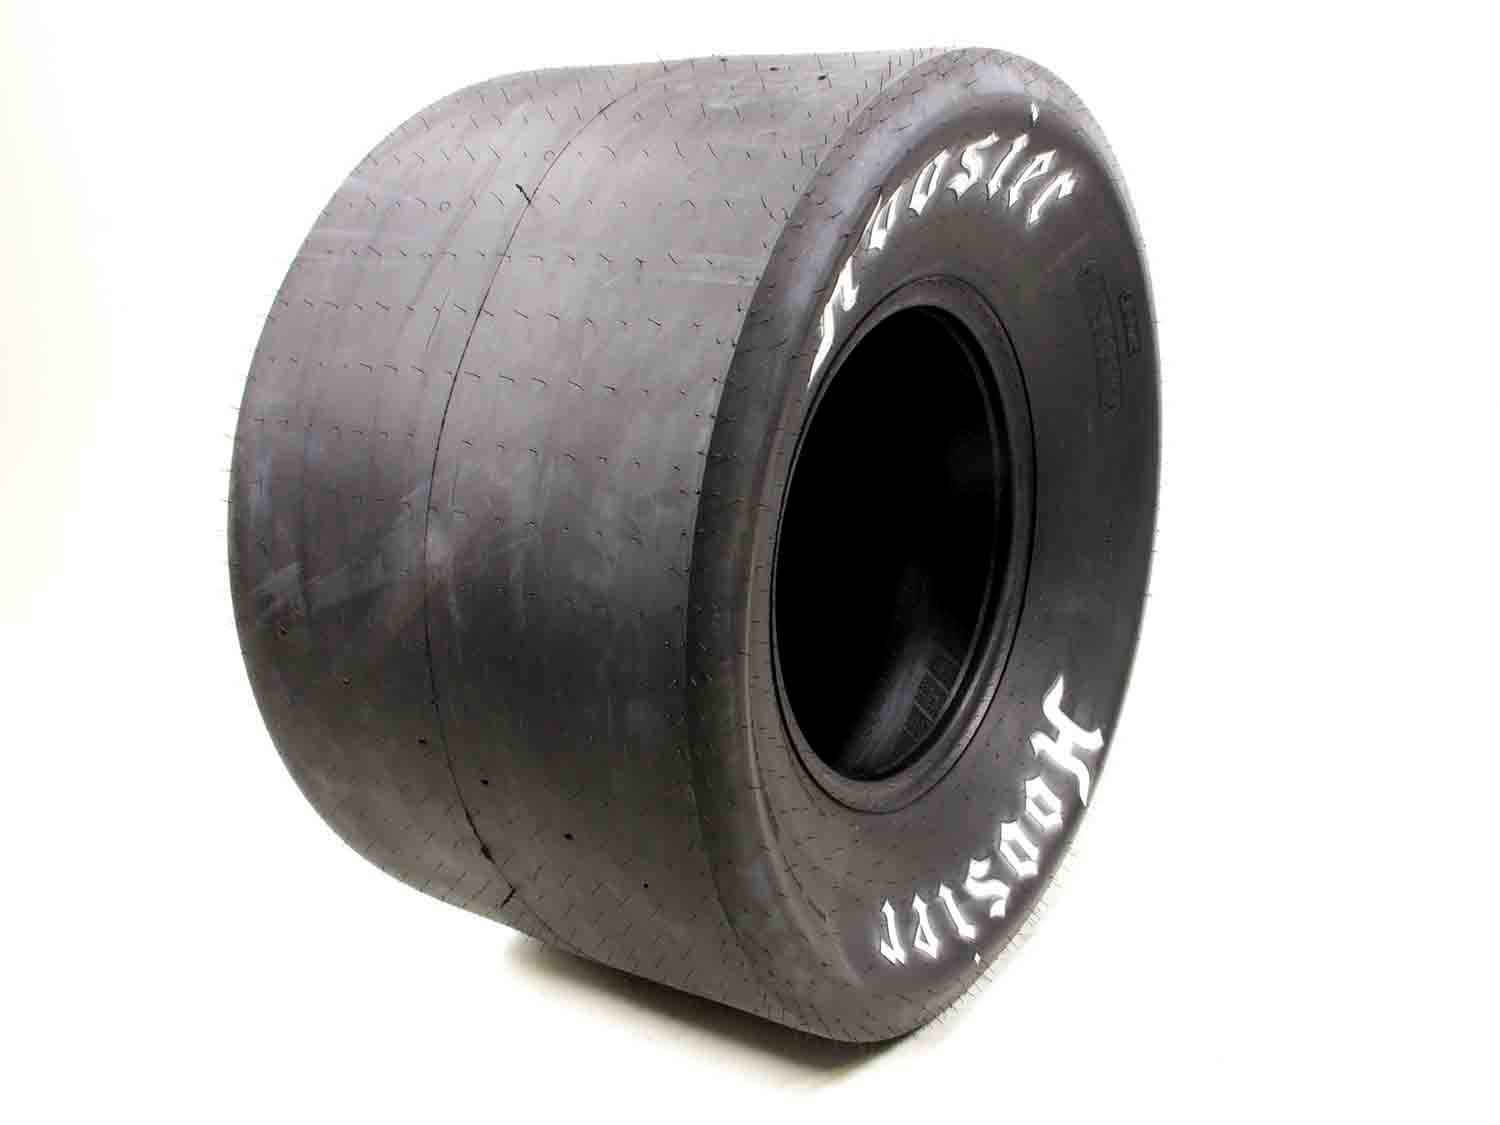 14.5/32.0L-15 Drag Tire - Burlile Performance Products